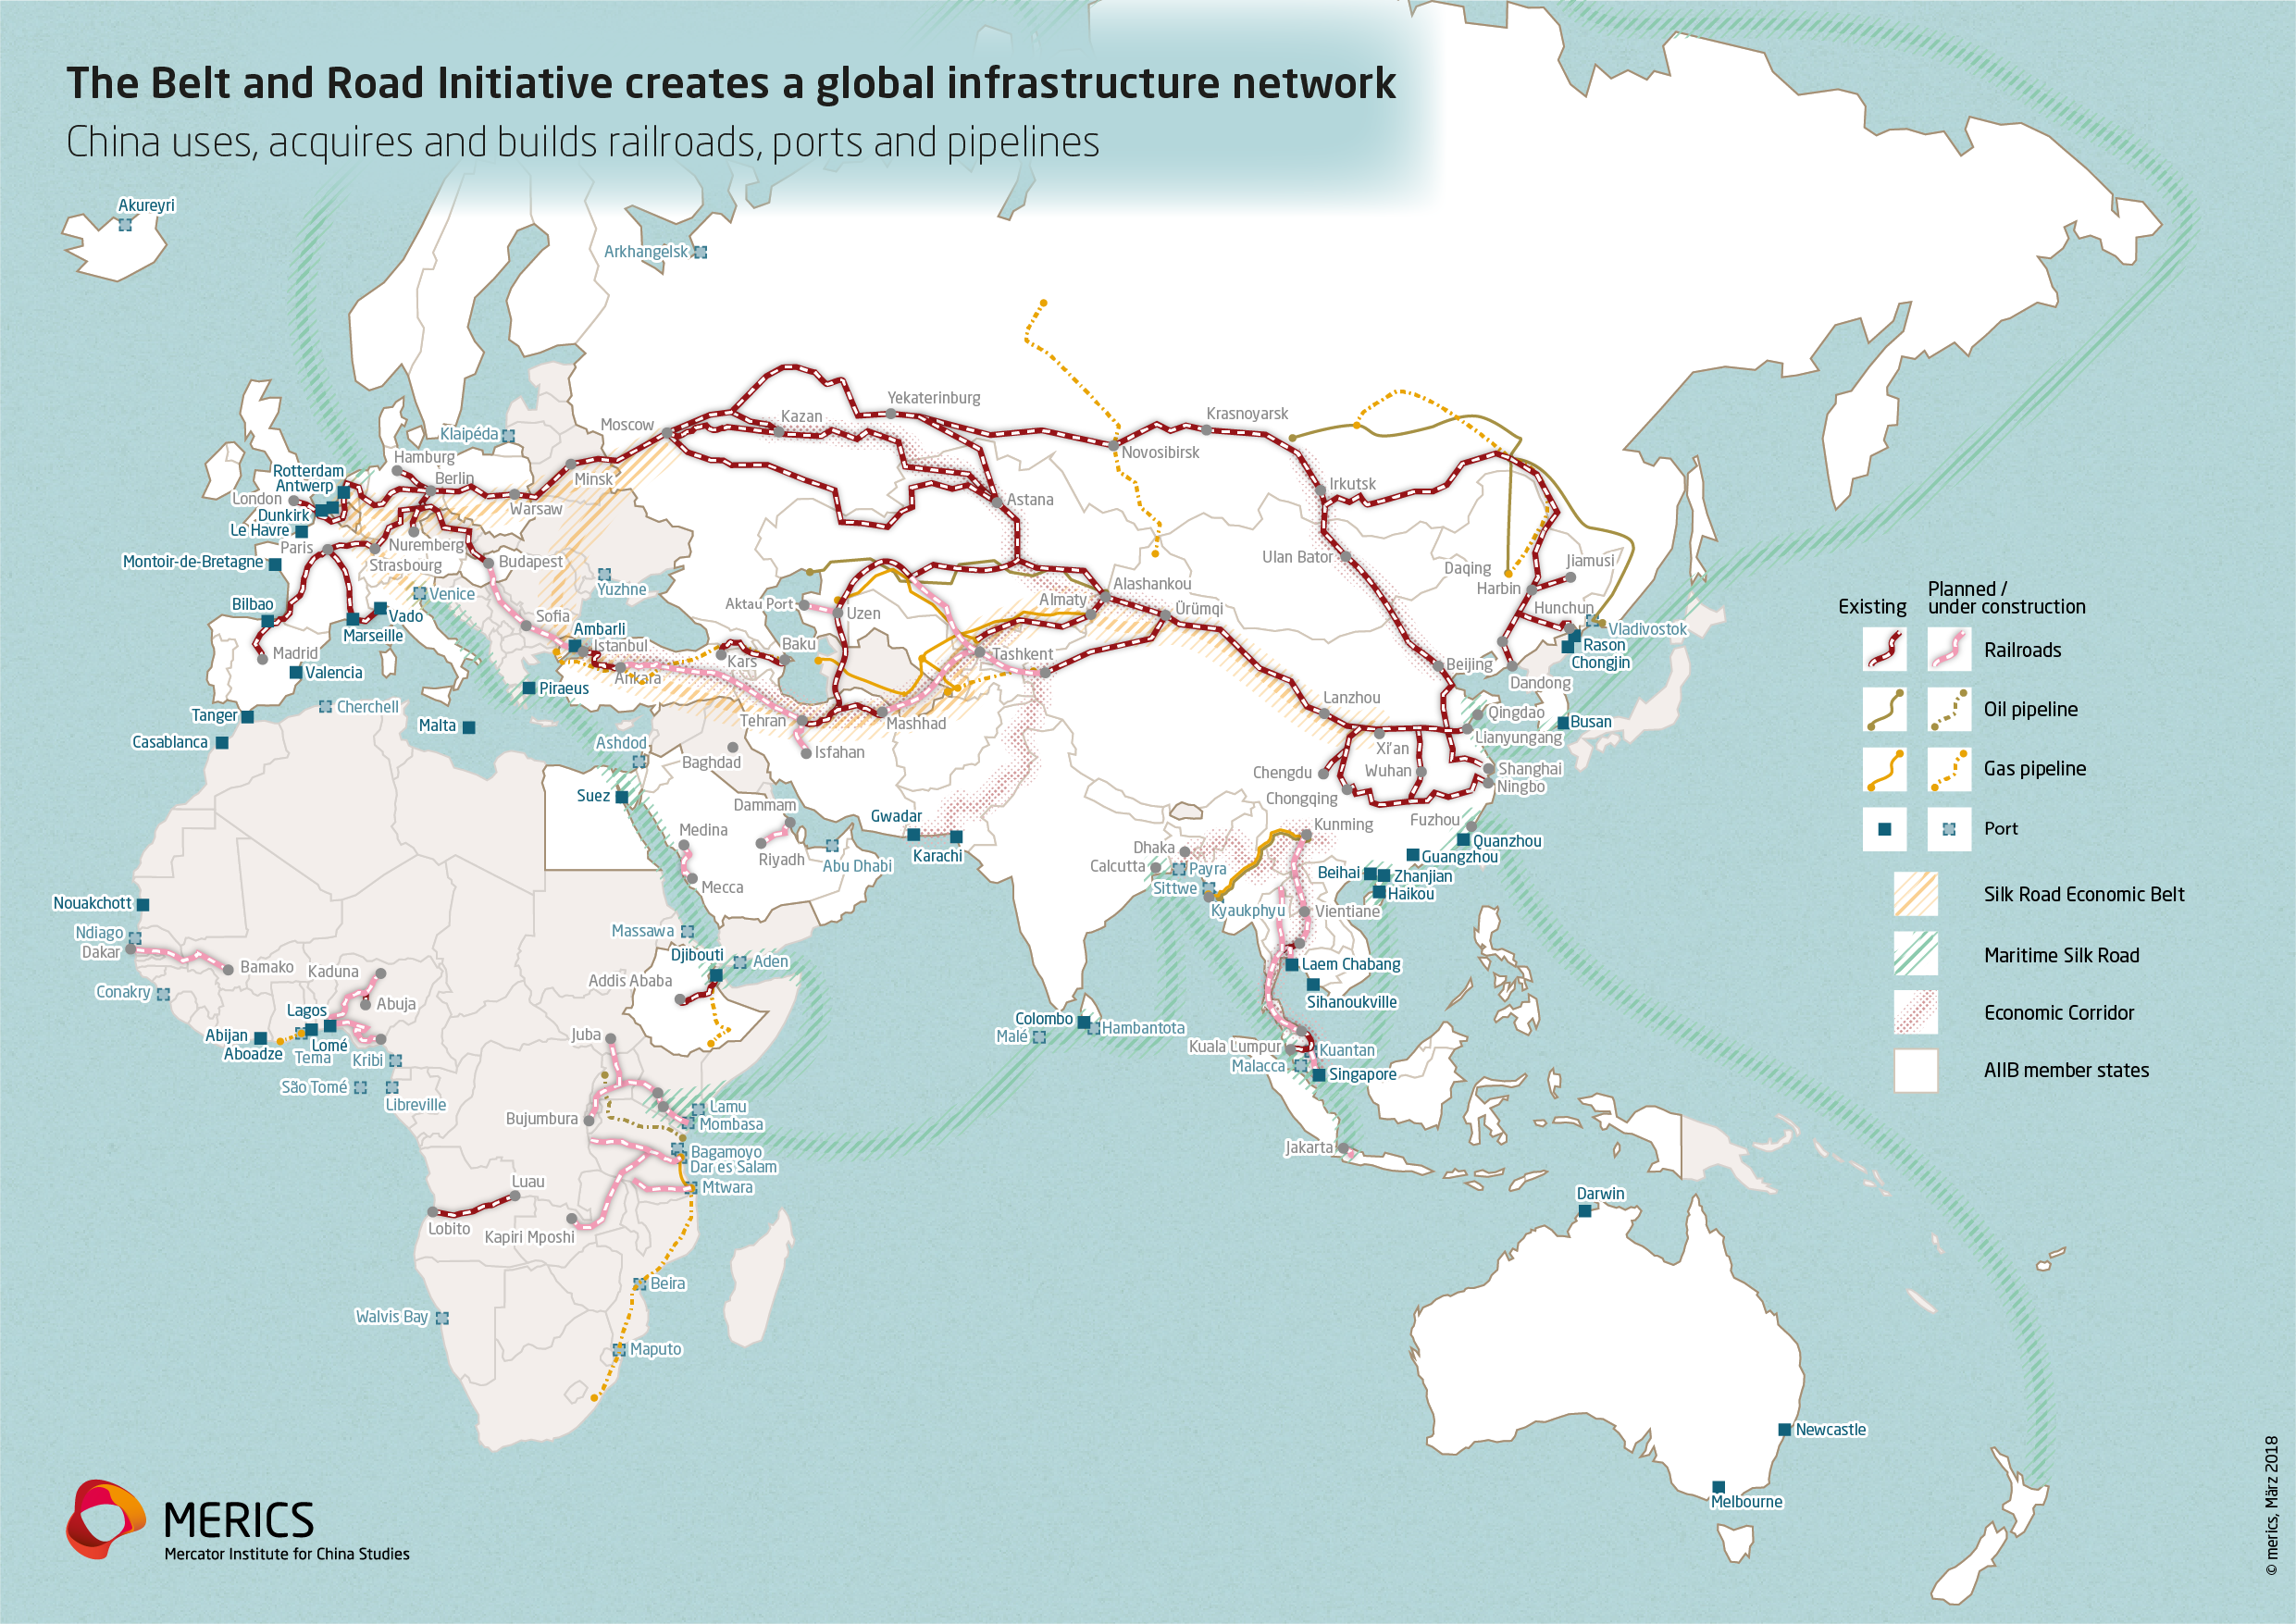 silk road on world map